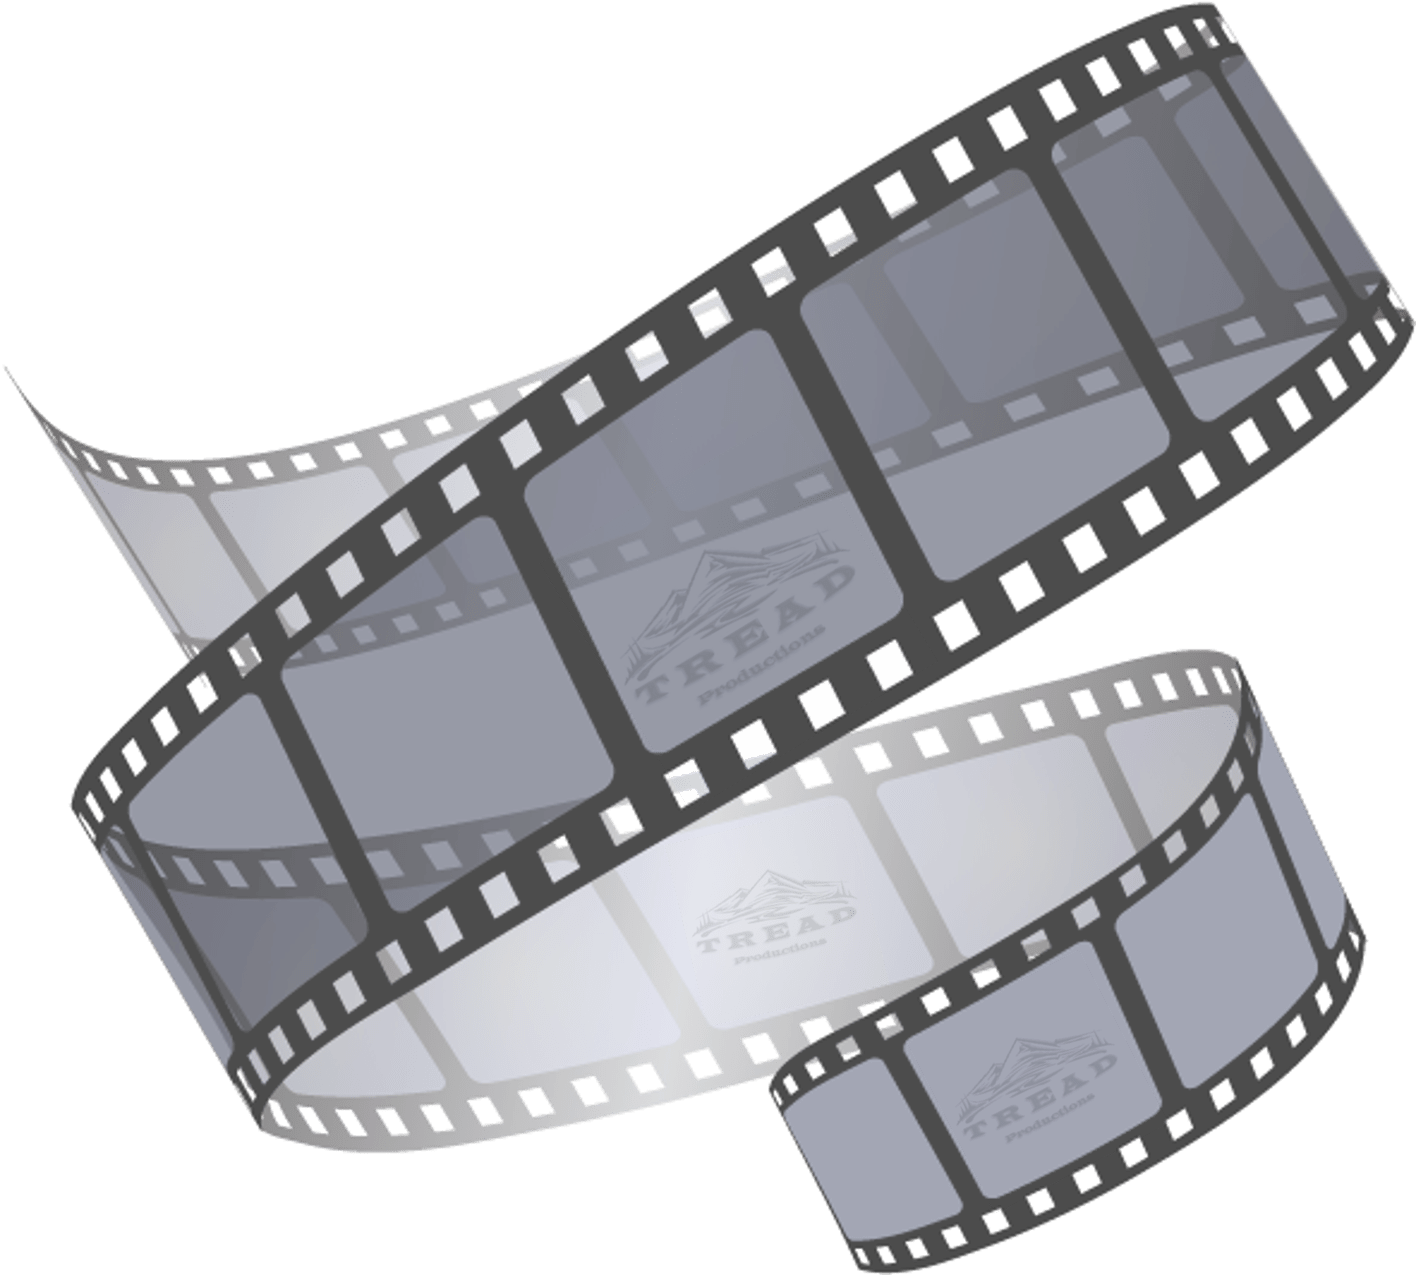 Tread Productions Cinema News cinema news  